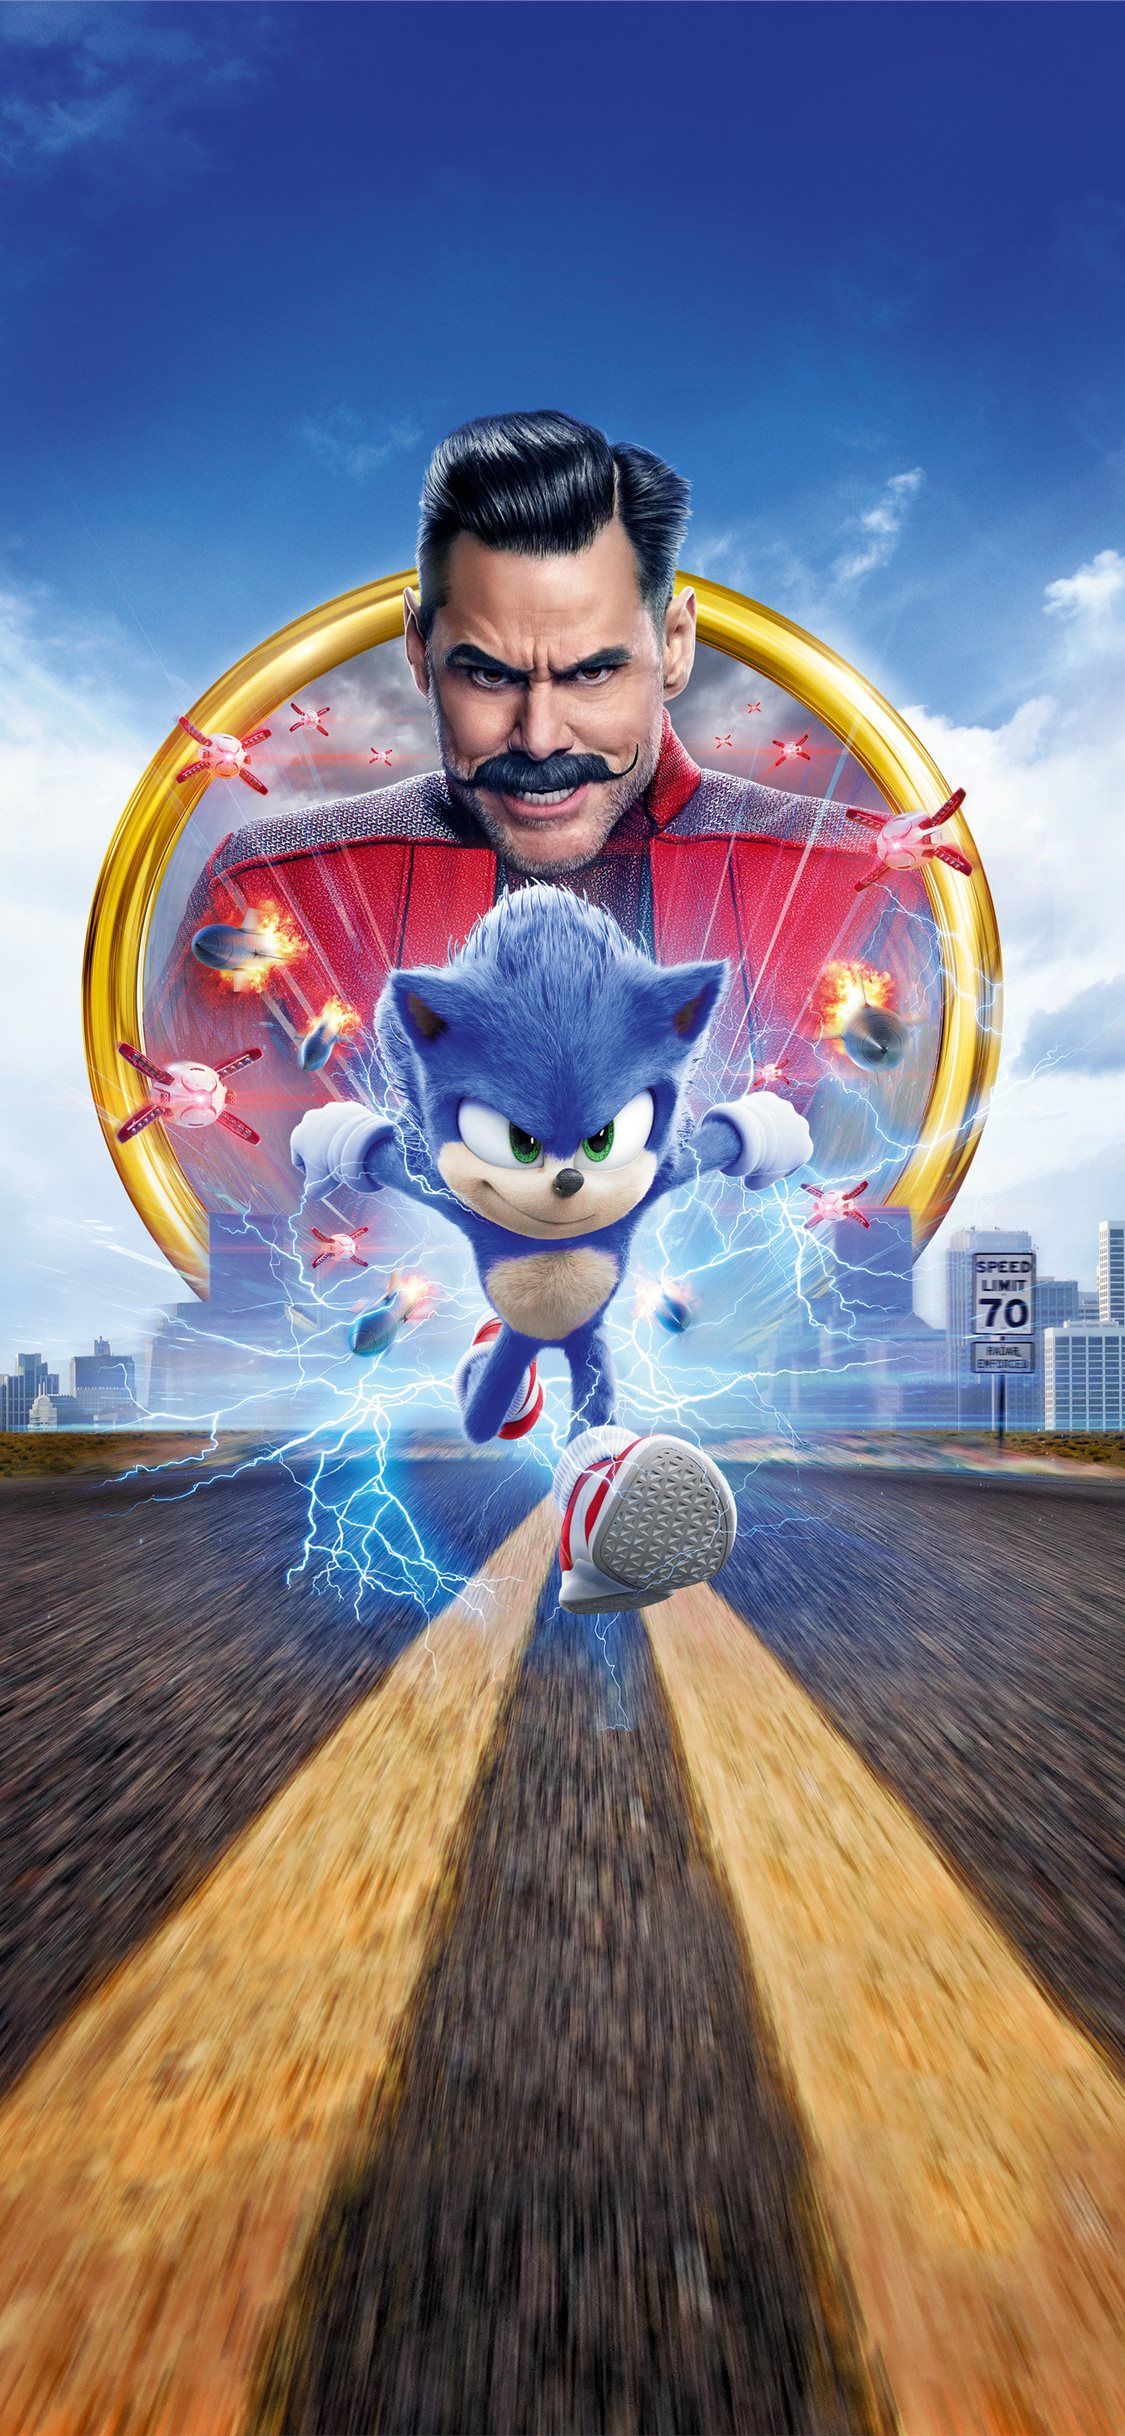 sonic the hedgehog 2020 15k #SonicTheHedgehog #movies Movies k k k k #iPhoneXWallpaper. Sonic the hedgehog, Sonic, Movie wallpaper